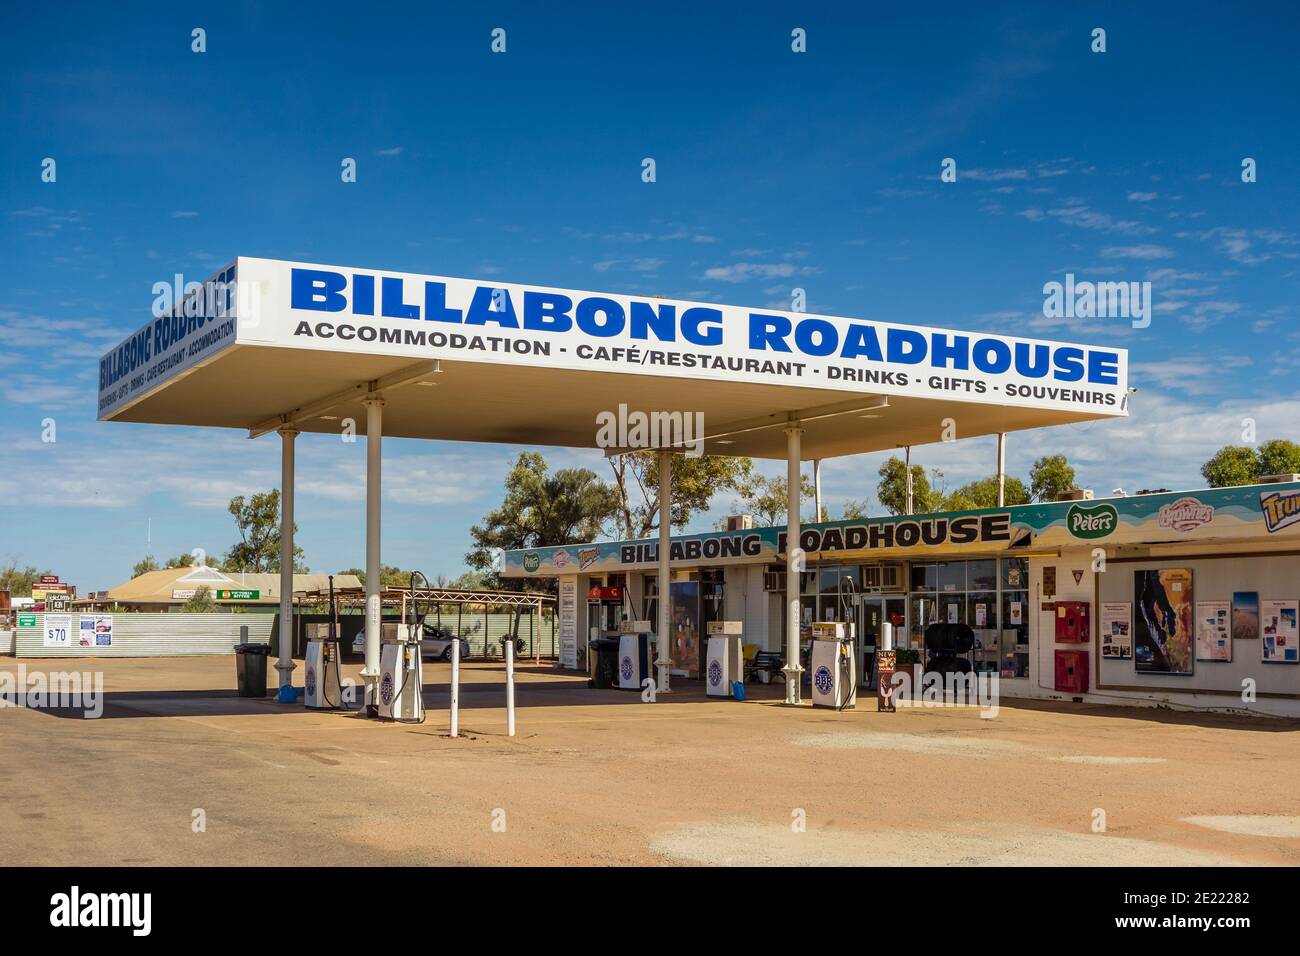 Billabong Roadhouse, Coral Coast, Western Australia Stock Photo - Alamy